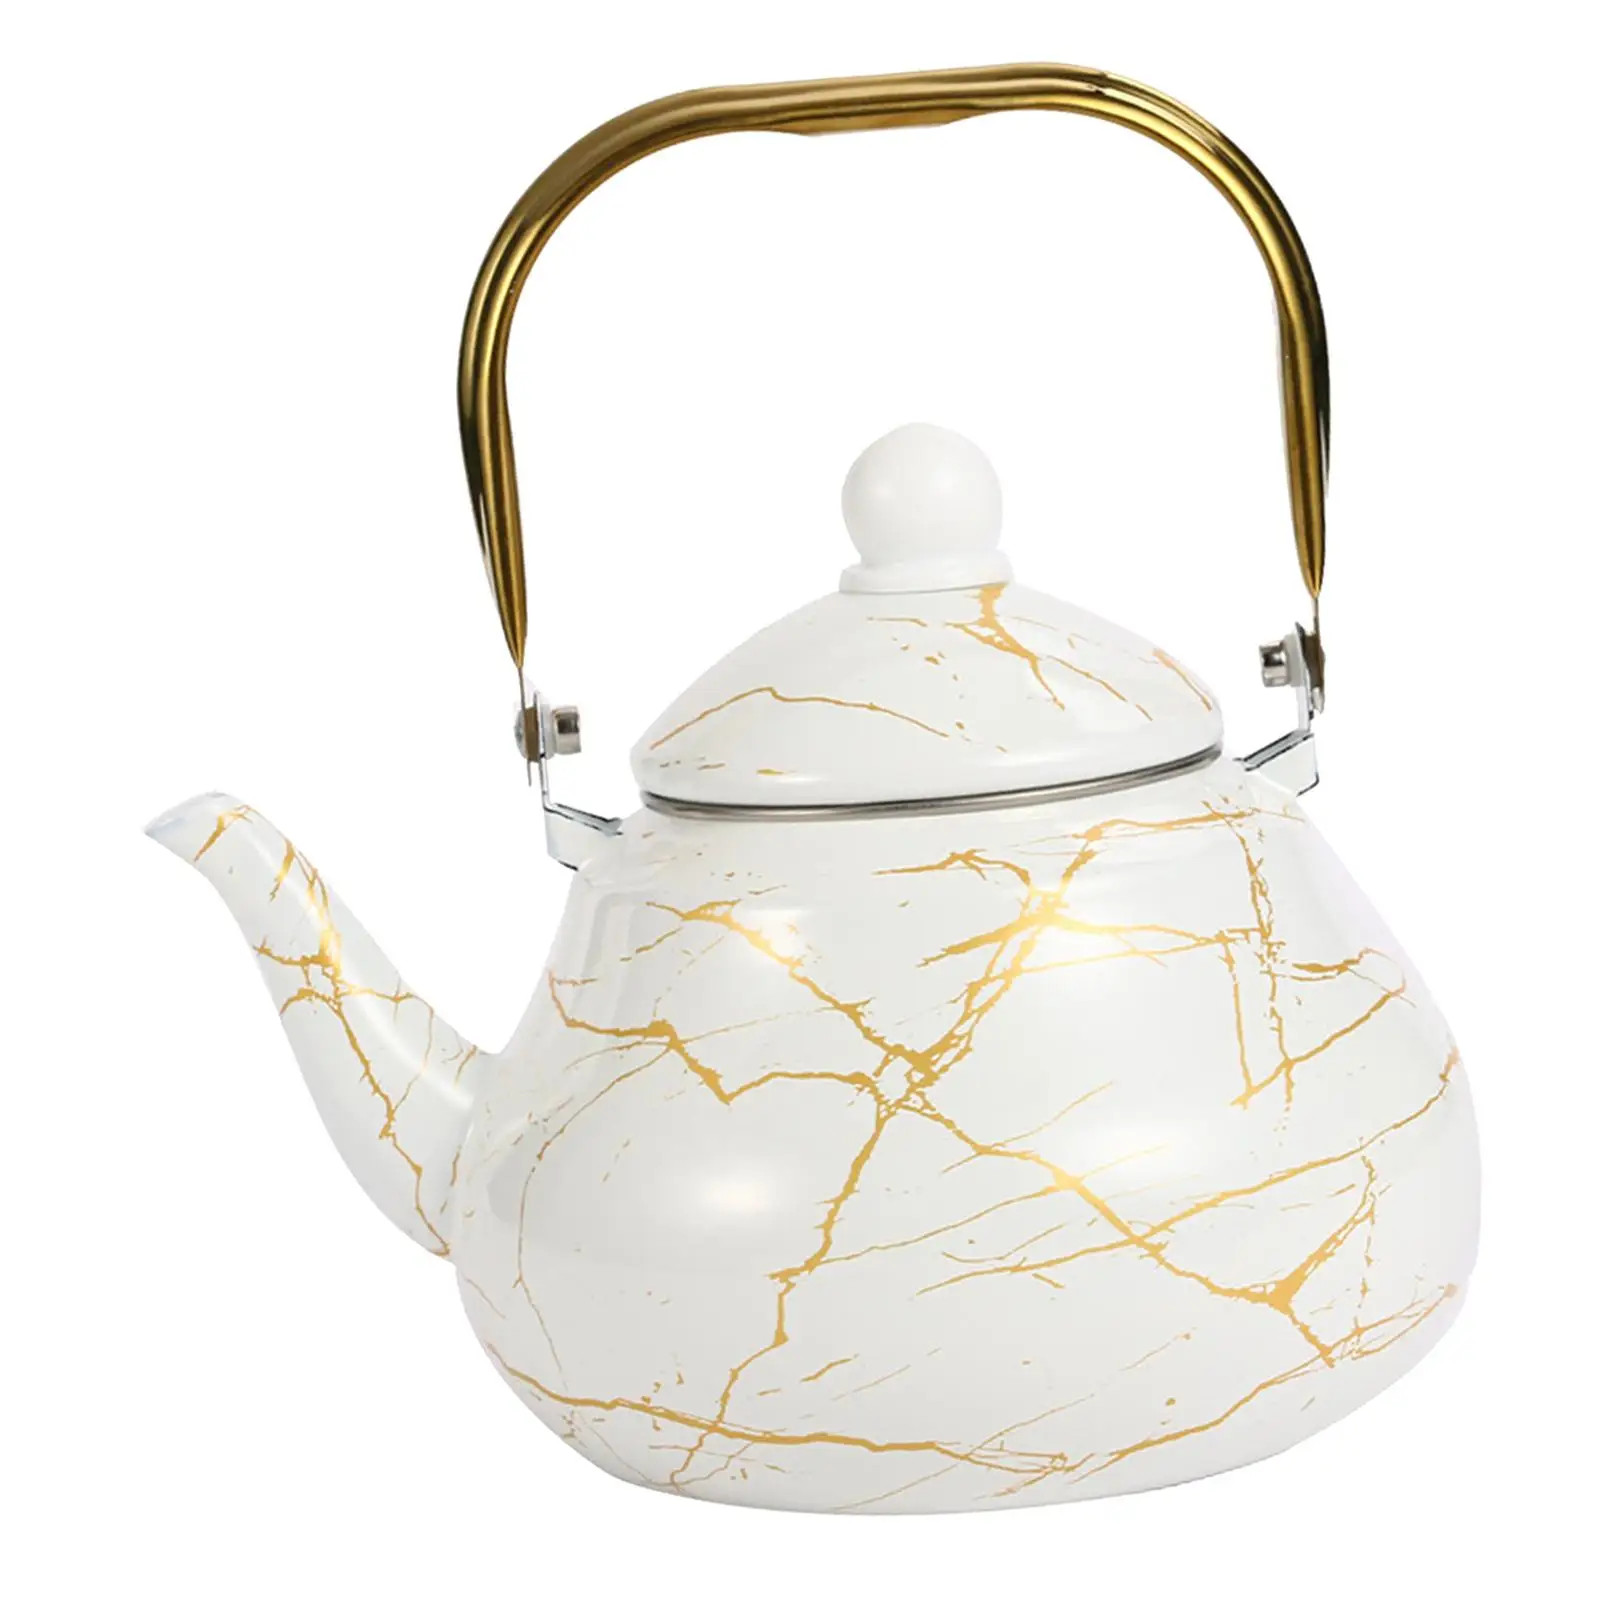 Large Capacity Teakettle Teapots Portable Pot for Home Kitchen Restaurant Picnic